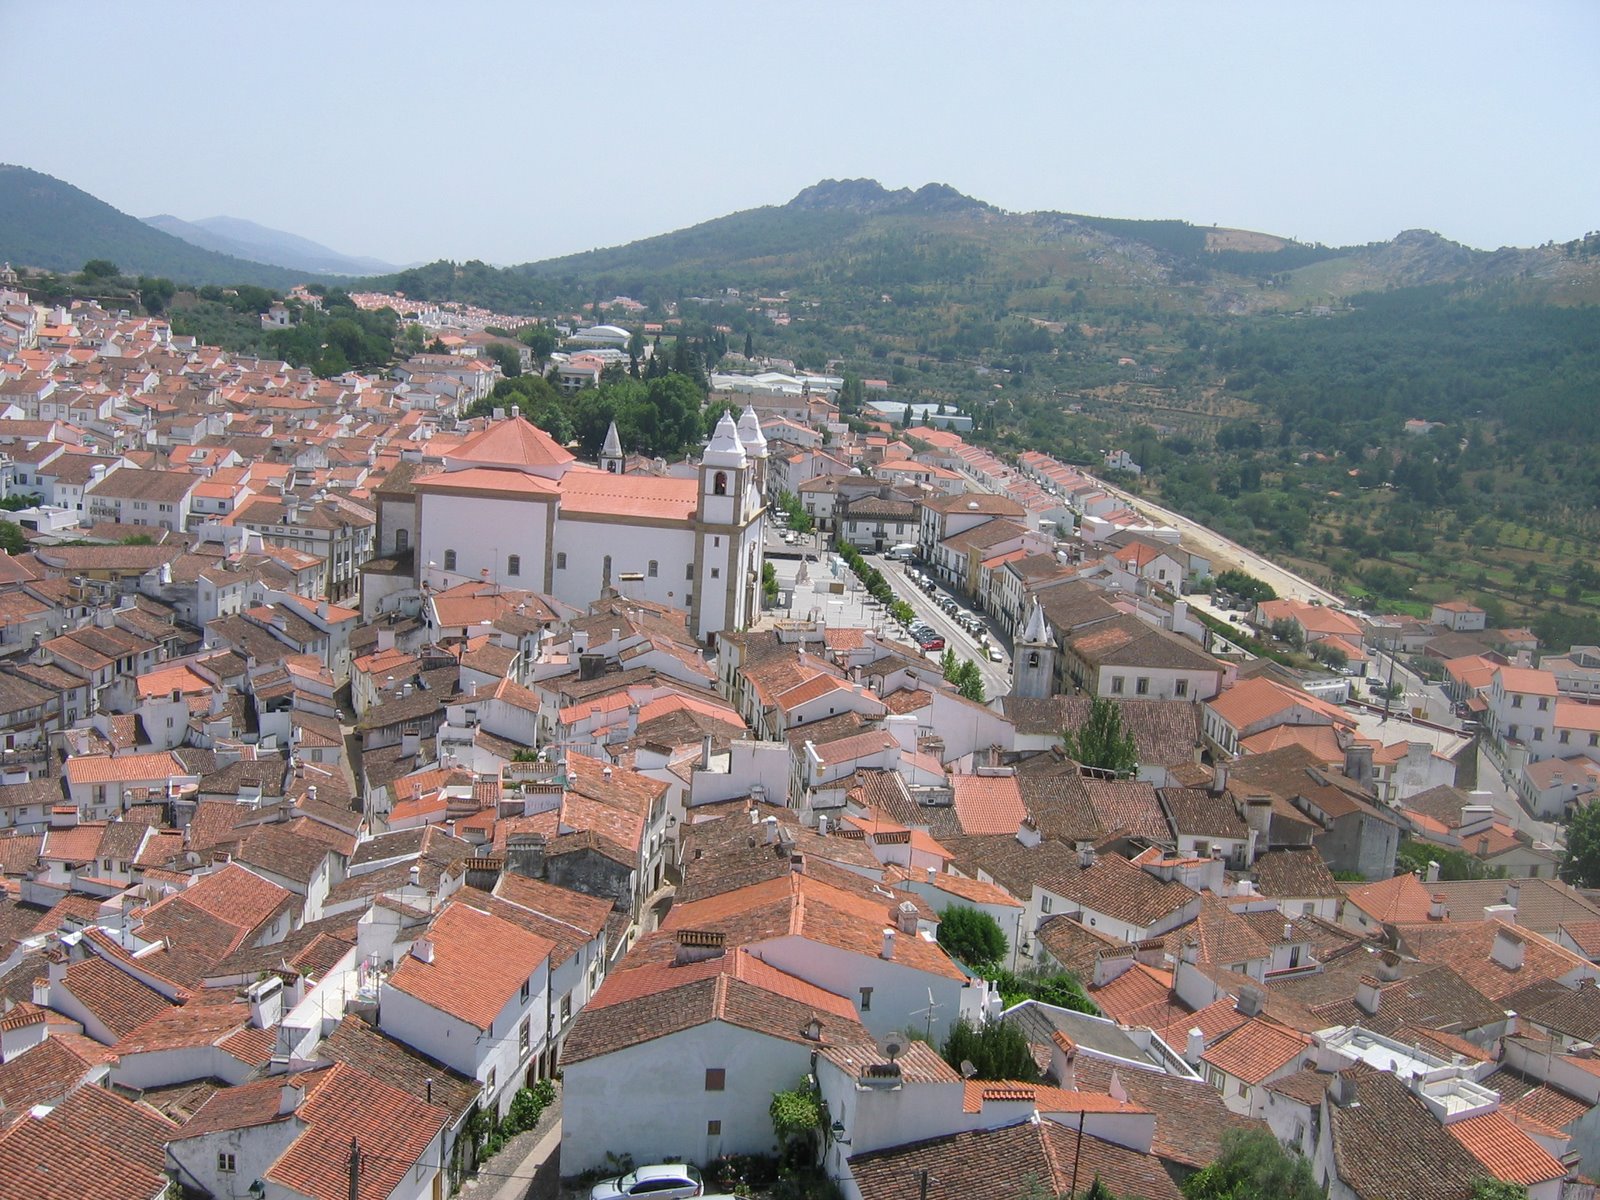 The Alentejo Region of Portugal